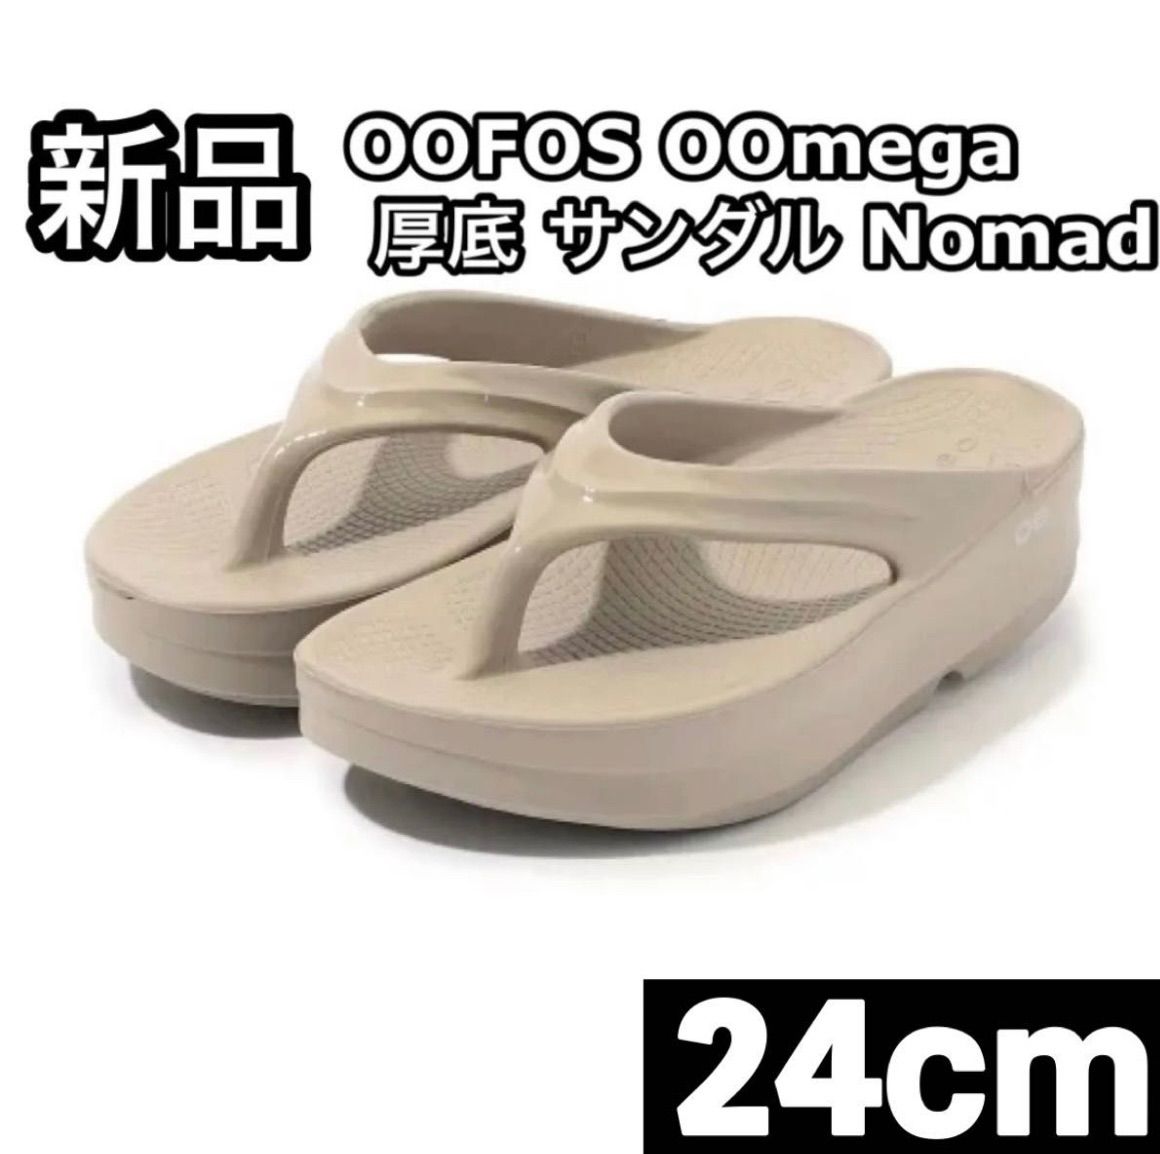 最高級・日本製 新品未使用 OOFOS OOmega Nomad 24cm | artfive.co.jp